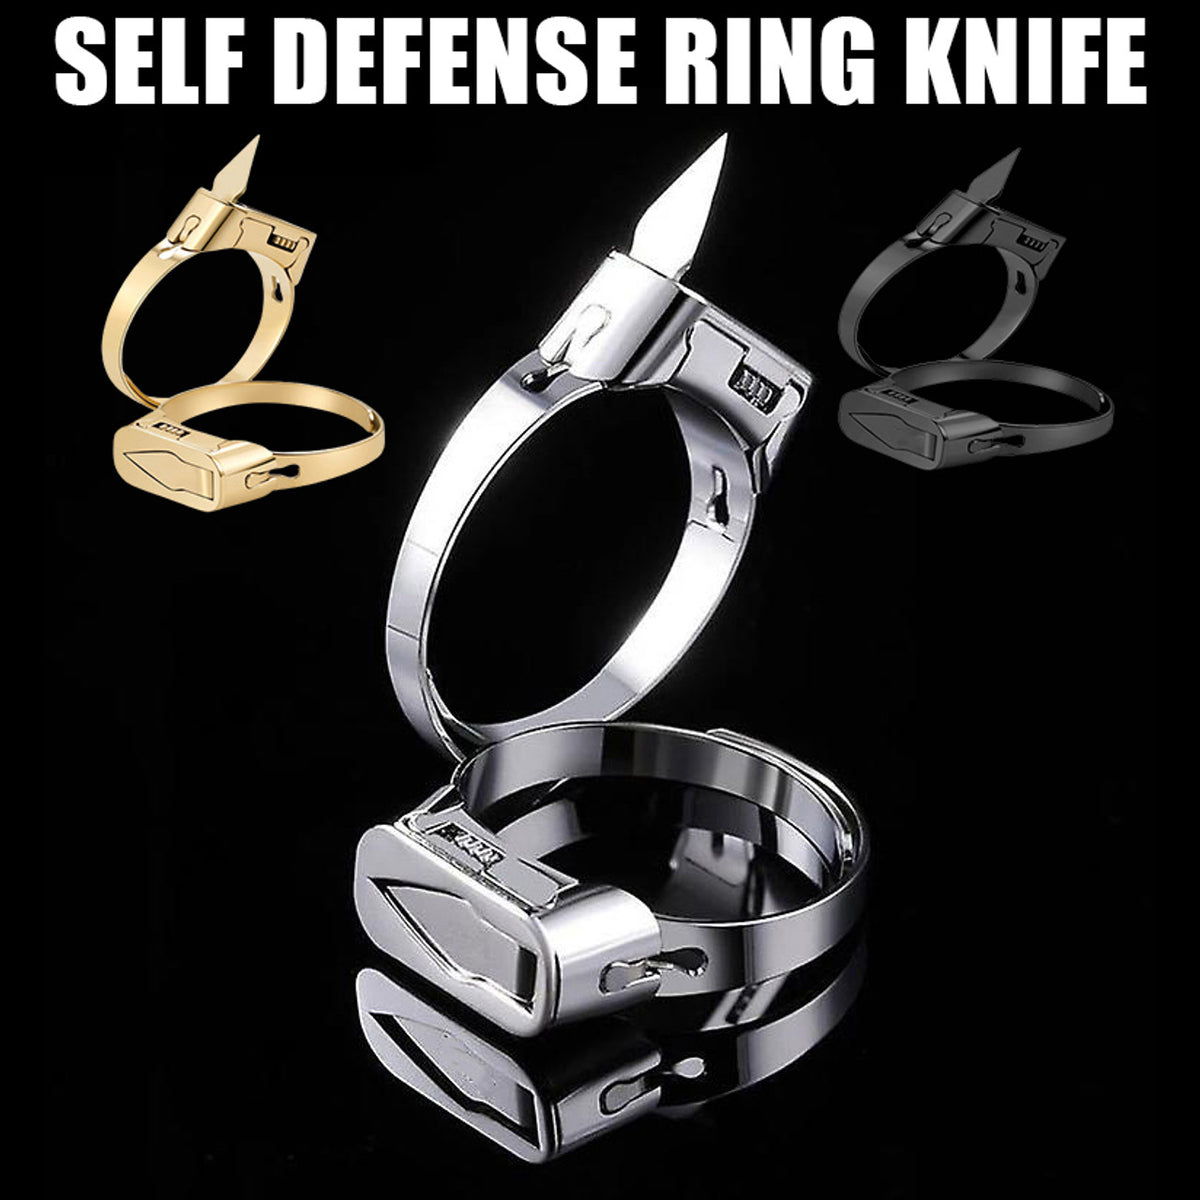  Defense Rings